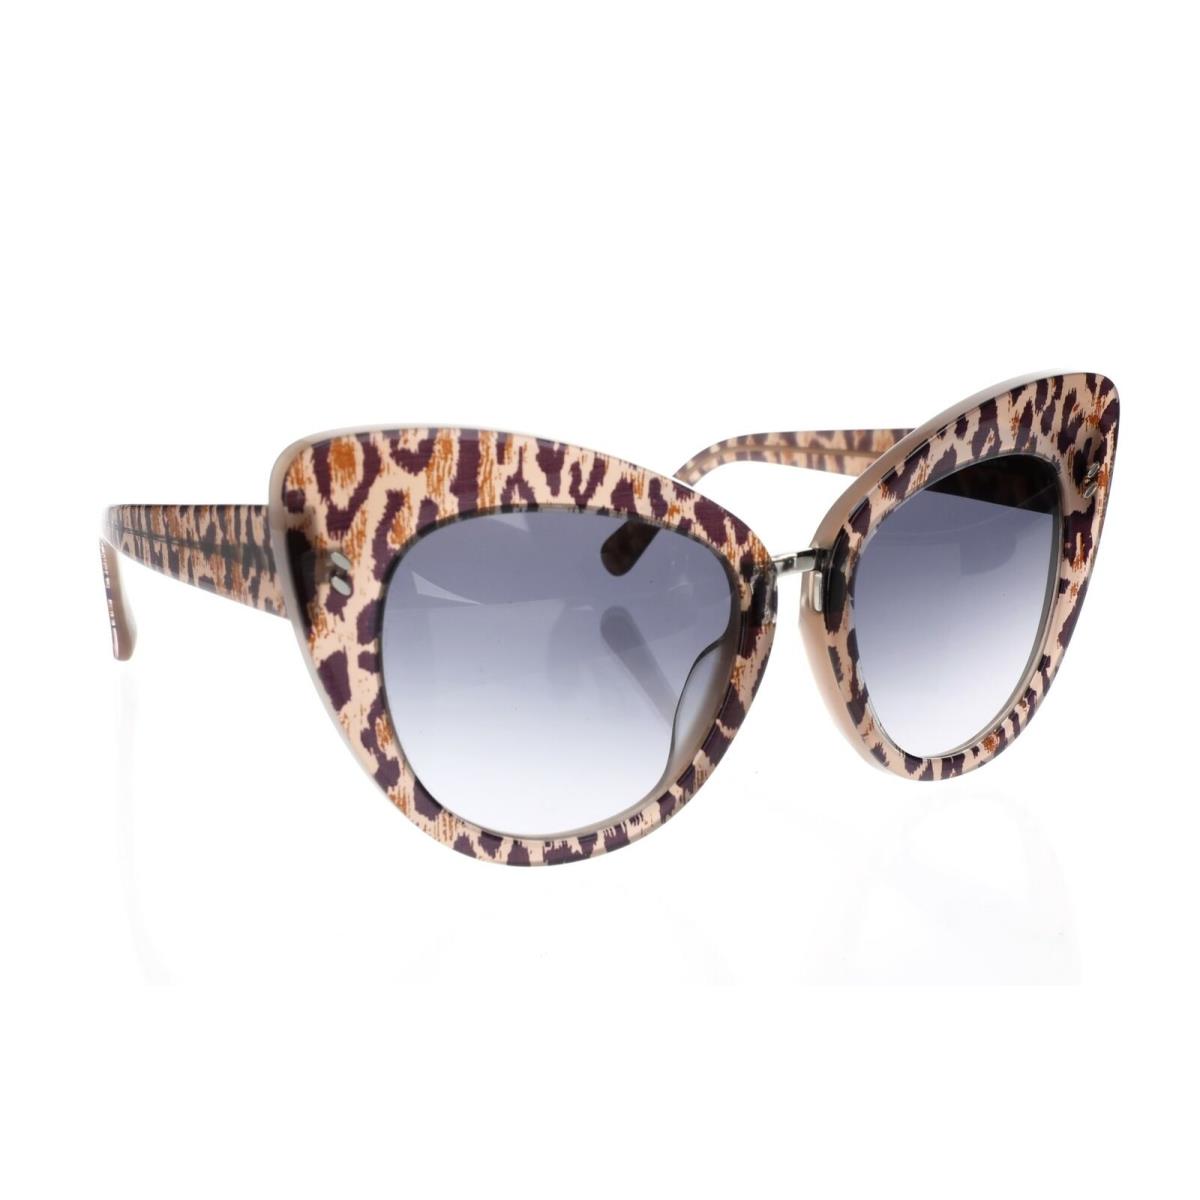 Stella Mccartney 257170 Womens Cat Eye Sunglasses Leopard/gray